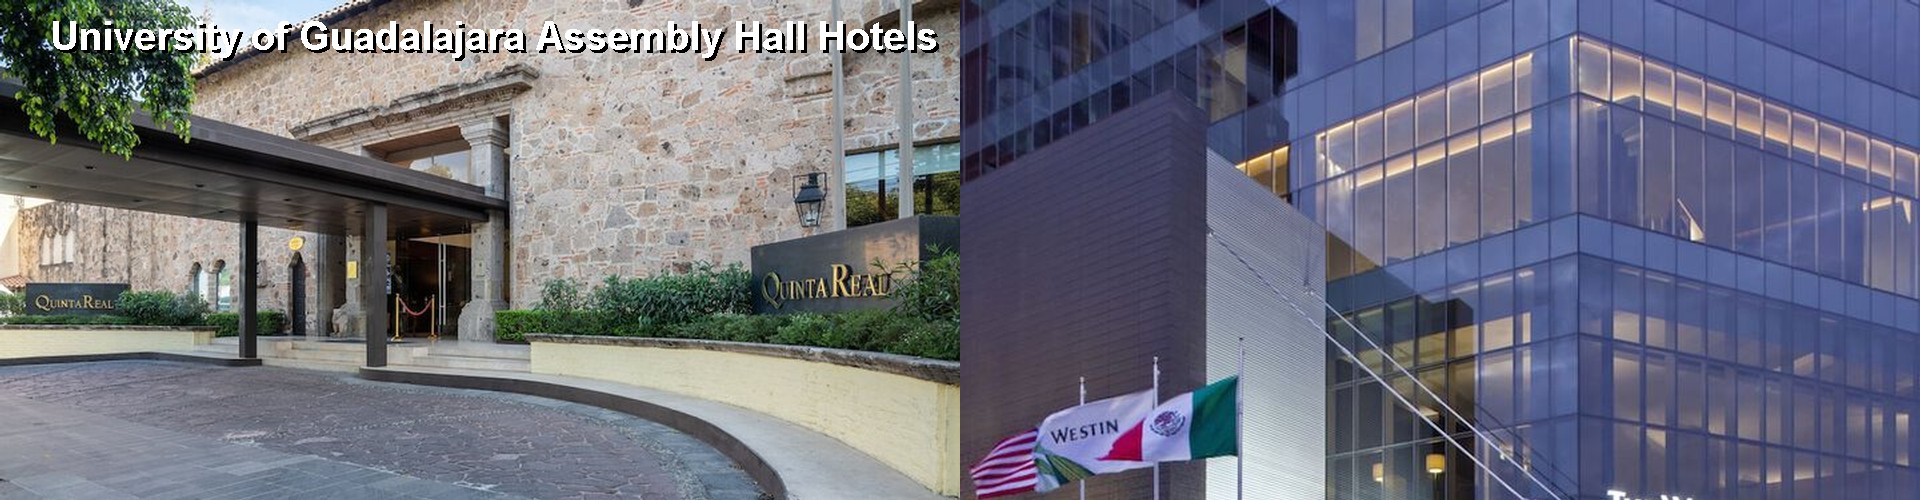 5 Best Hotels near University of Guadalajara Assembly Hall